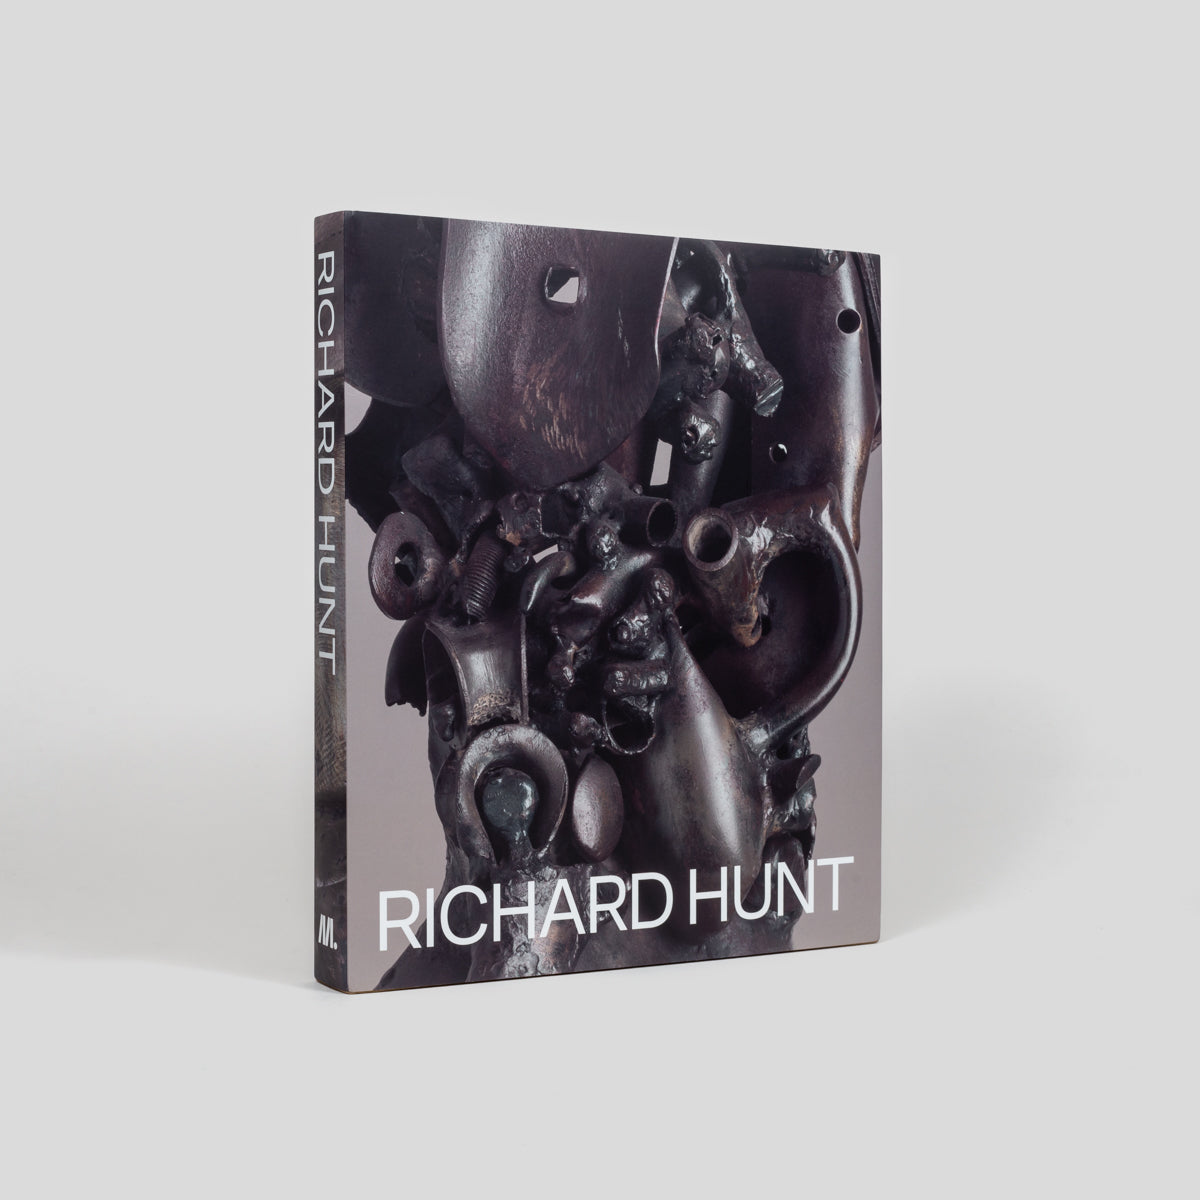 Richard Hunt